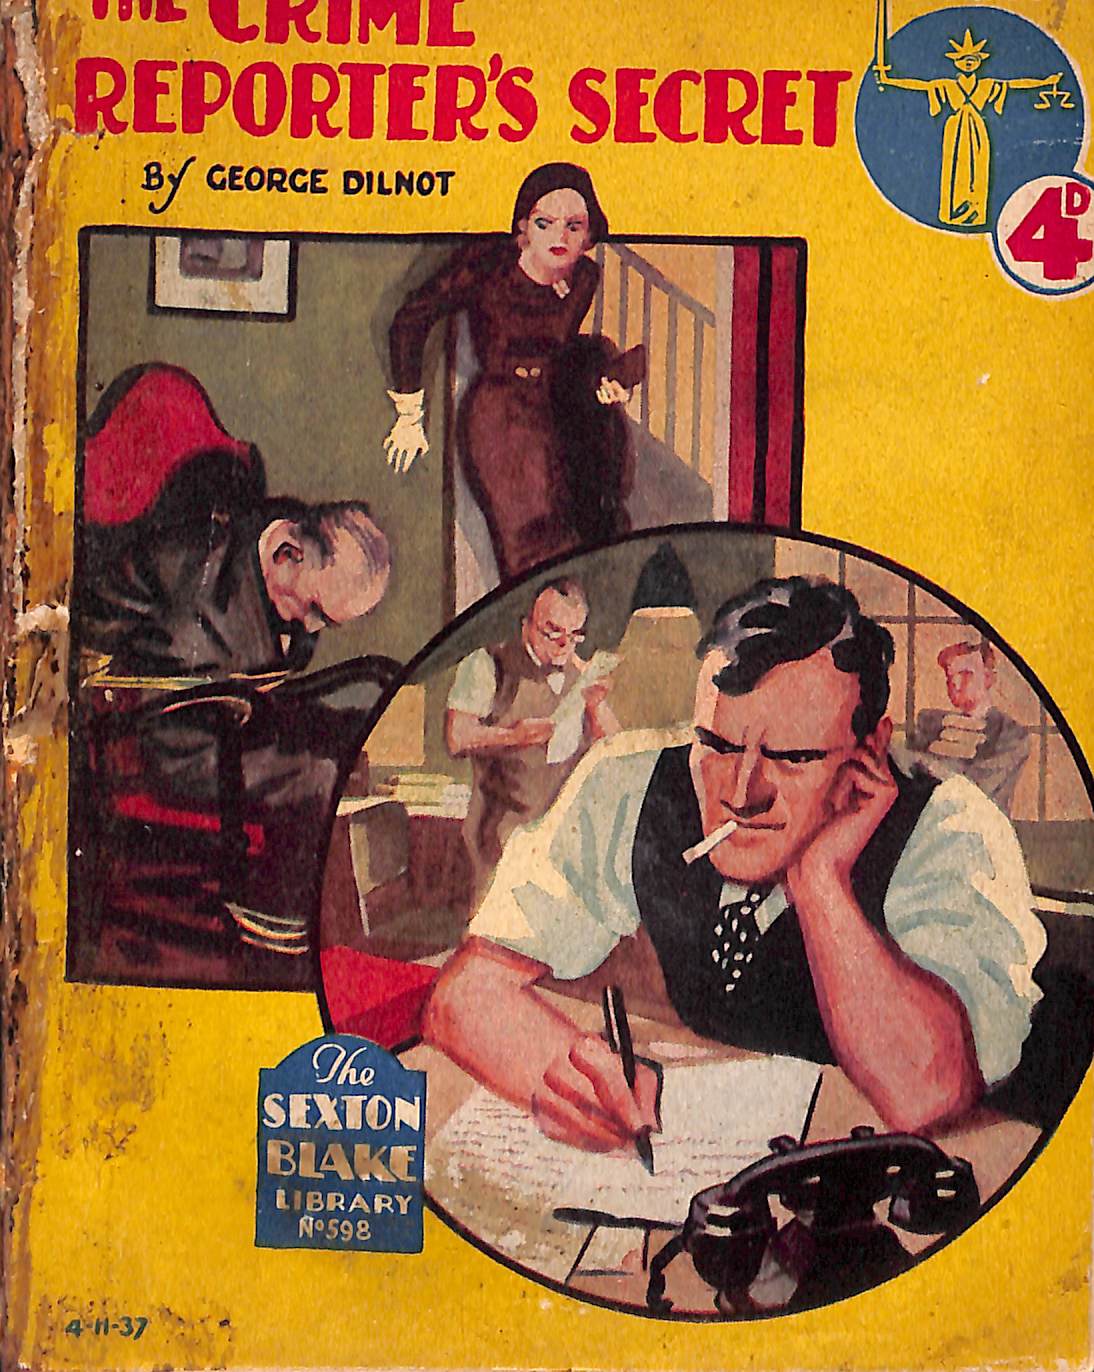 Book Cover For Sexton Blake Library S2 598 - The Crime Reporter's Secret